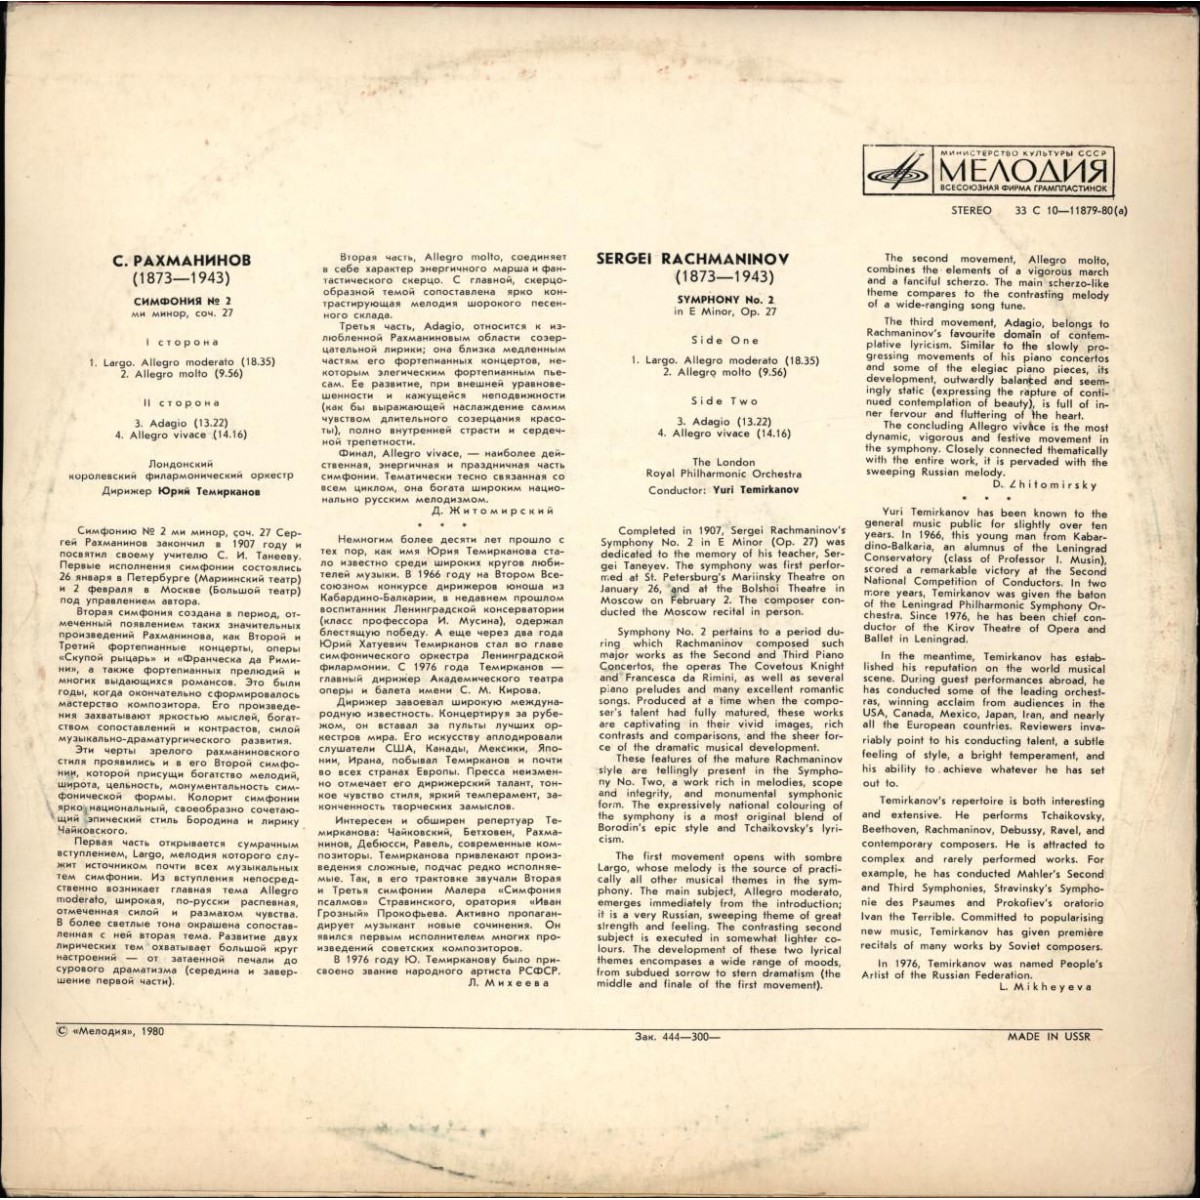 С. РАХМАНИНОВ (1873—1943): Симфония № 2 ми минор, соч. 27 (дир. Ю. Темирканов)